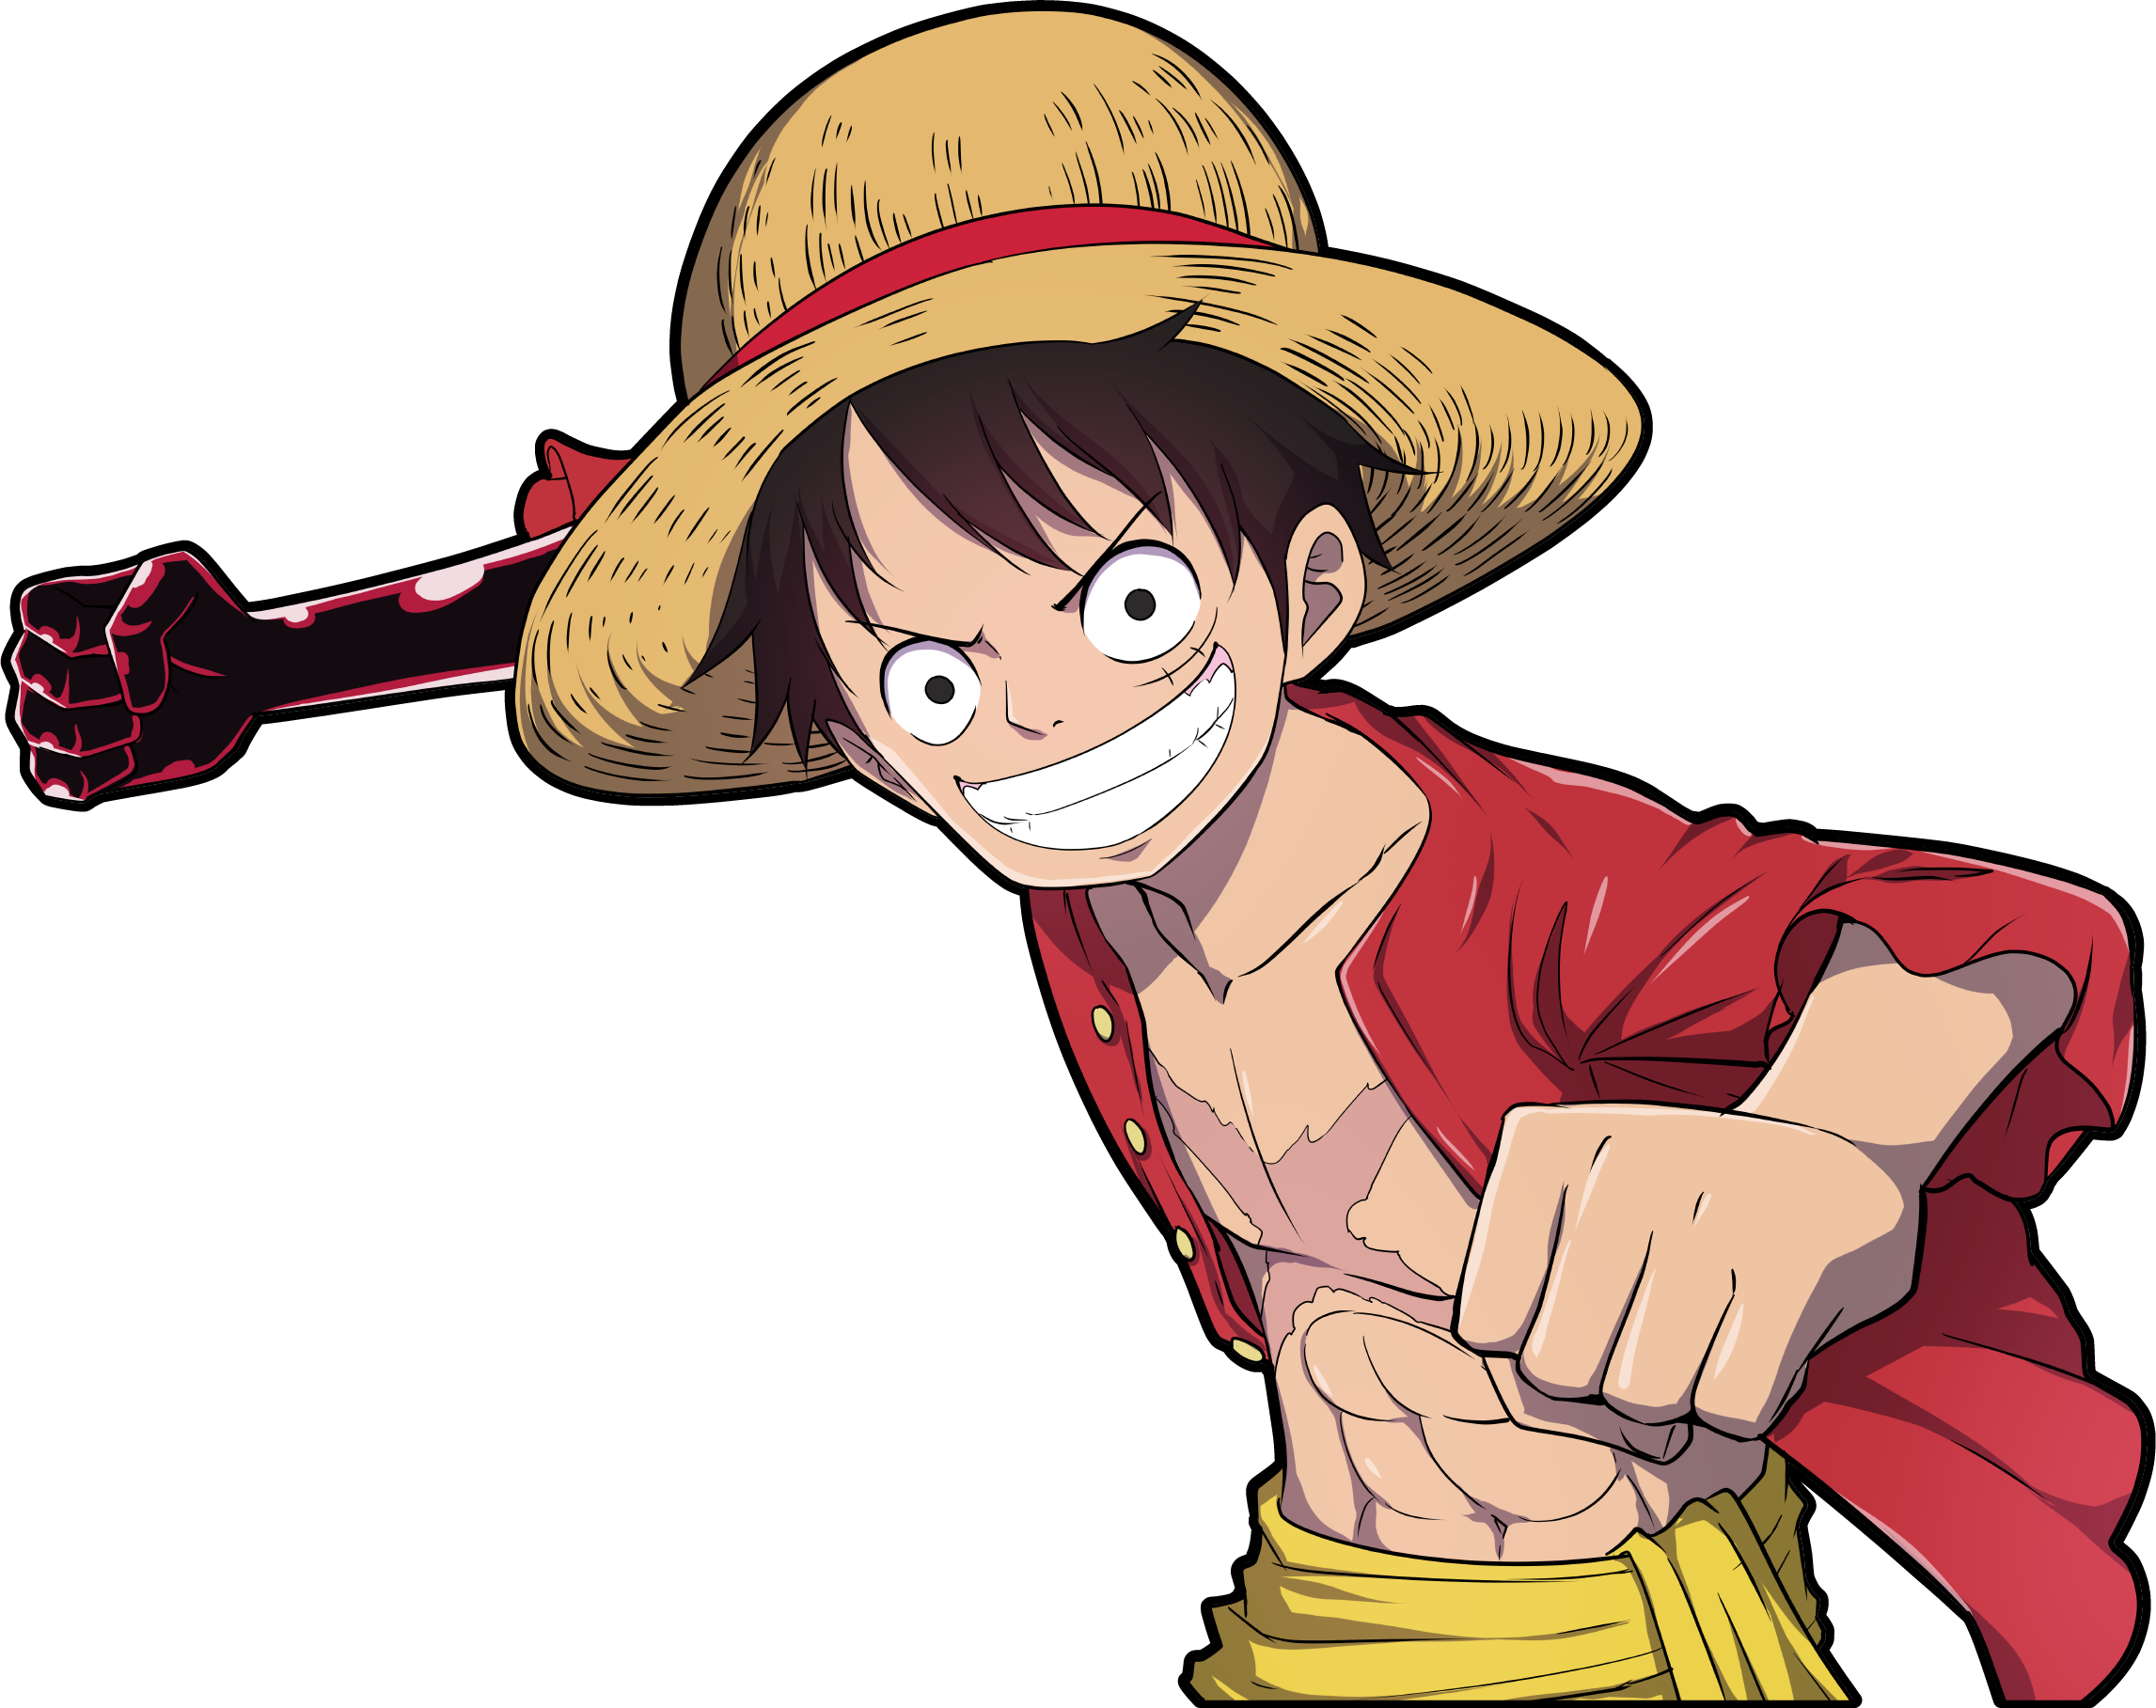 One Piece -- Roronoa Zoro Anime Decal Sticker